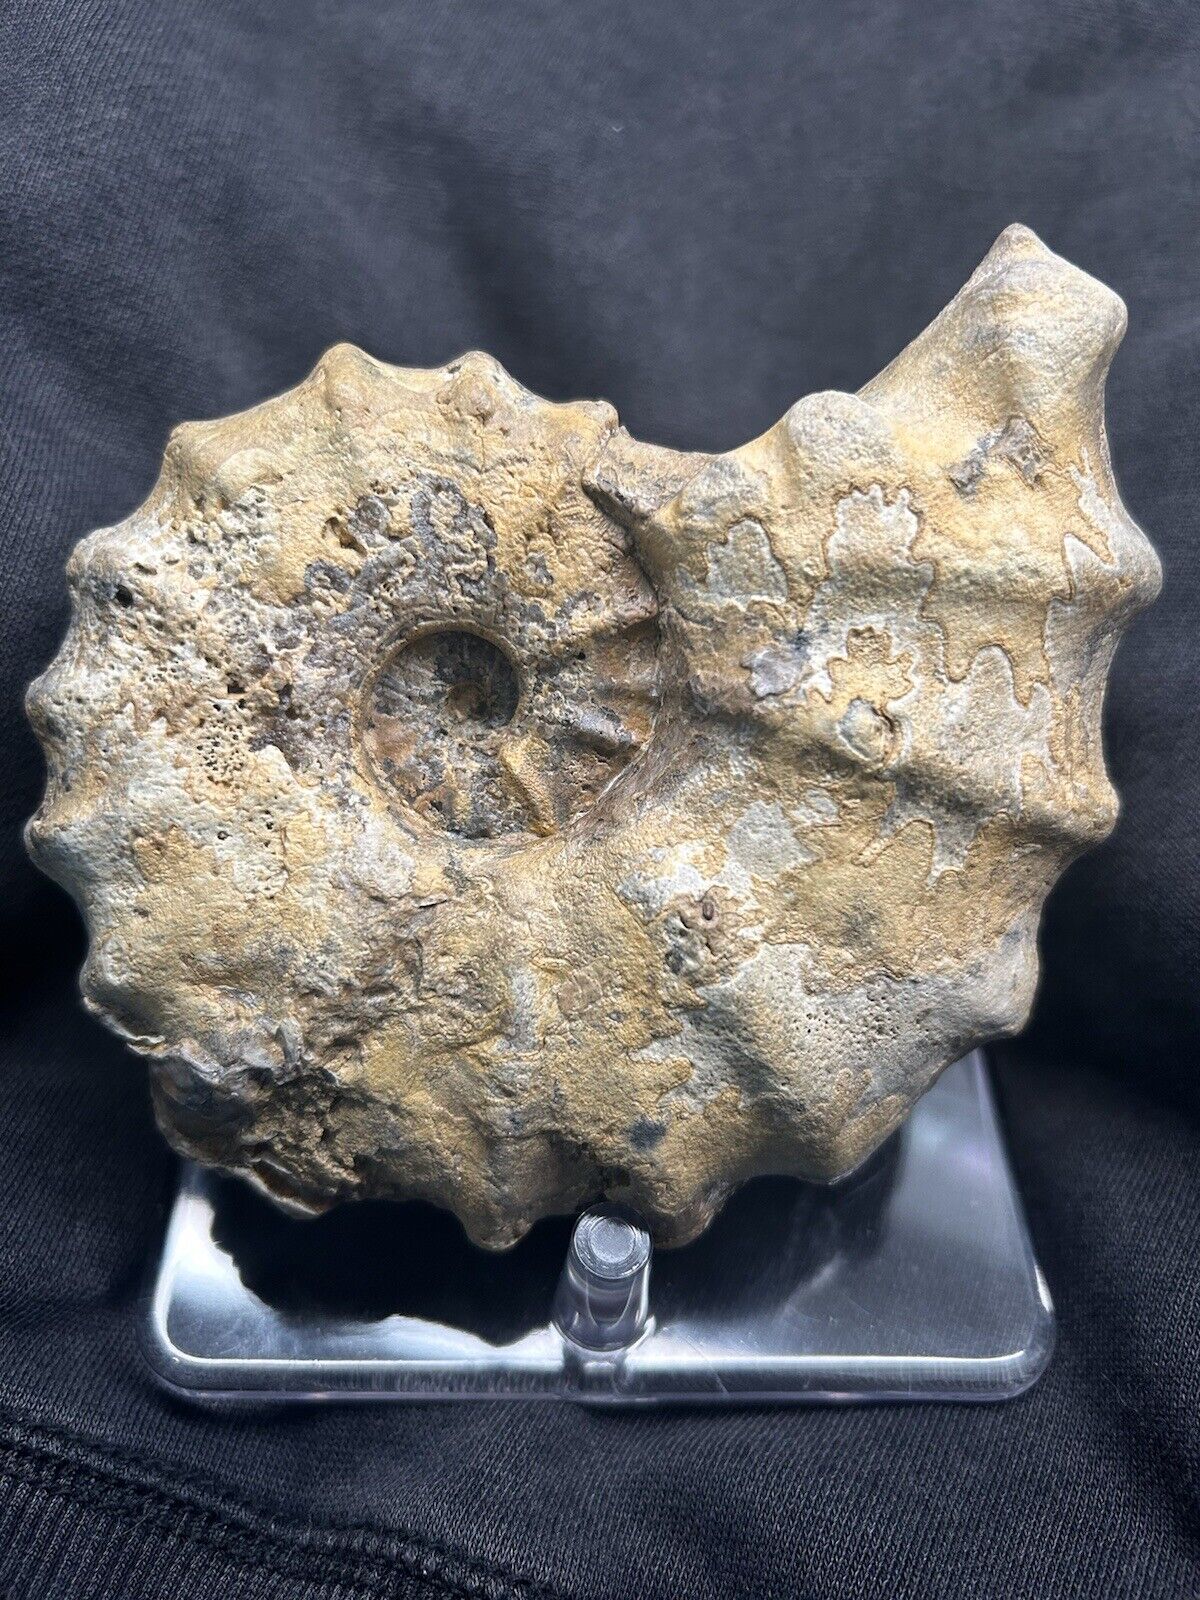 ROBUST 5” RARE Texas Fossil Woodbine Conlinoceras (Calycoceras) Ammonite,Oysters